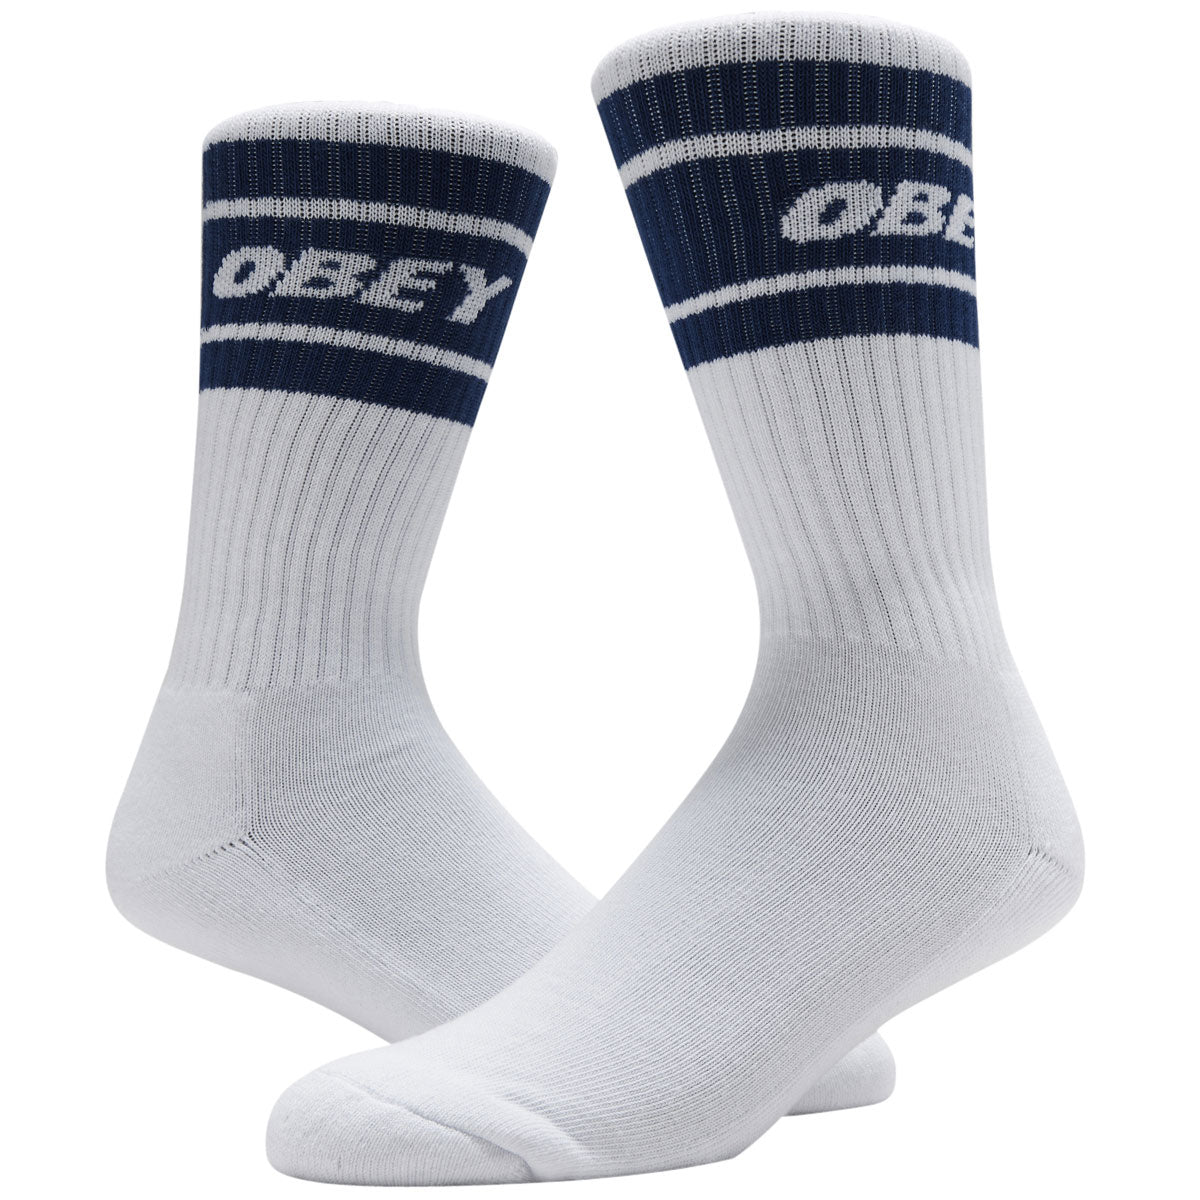 Obey Cooper Ii Socks - White/Surf Blue image 2